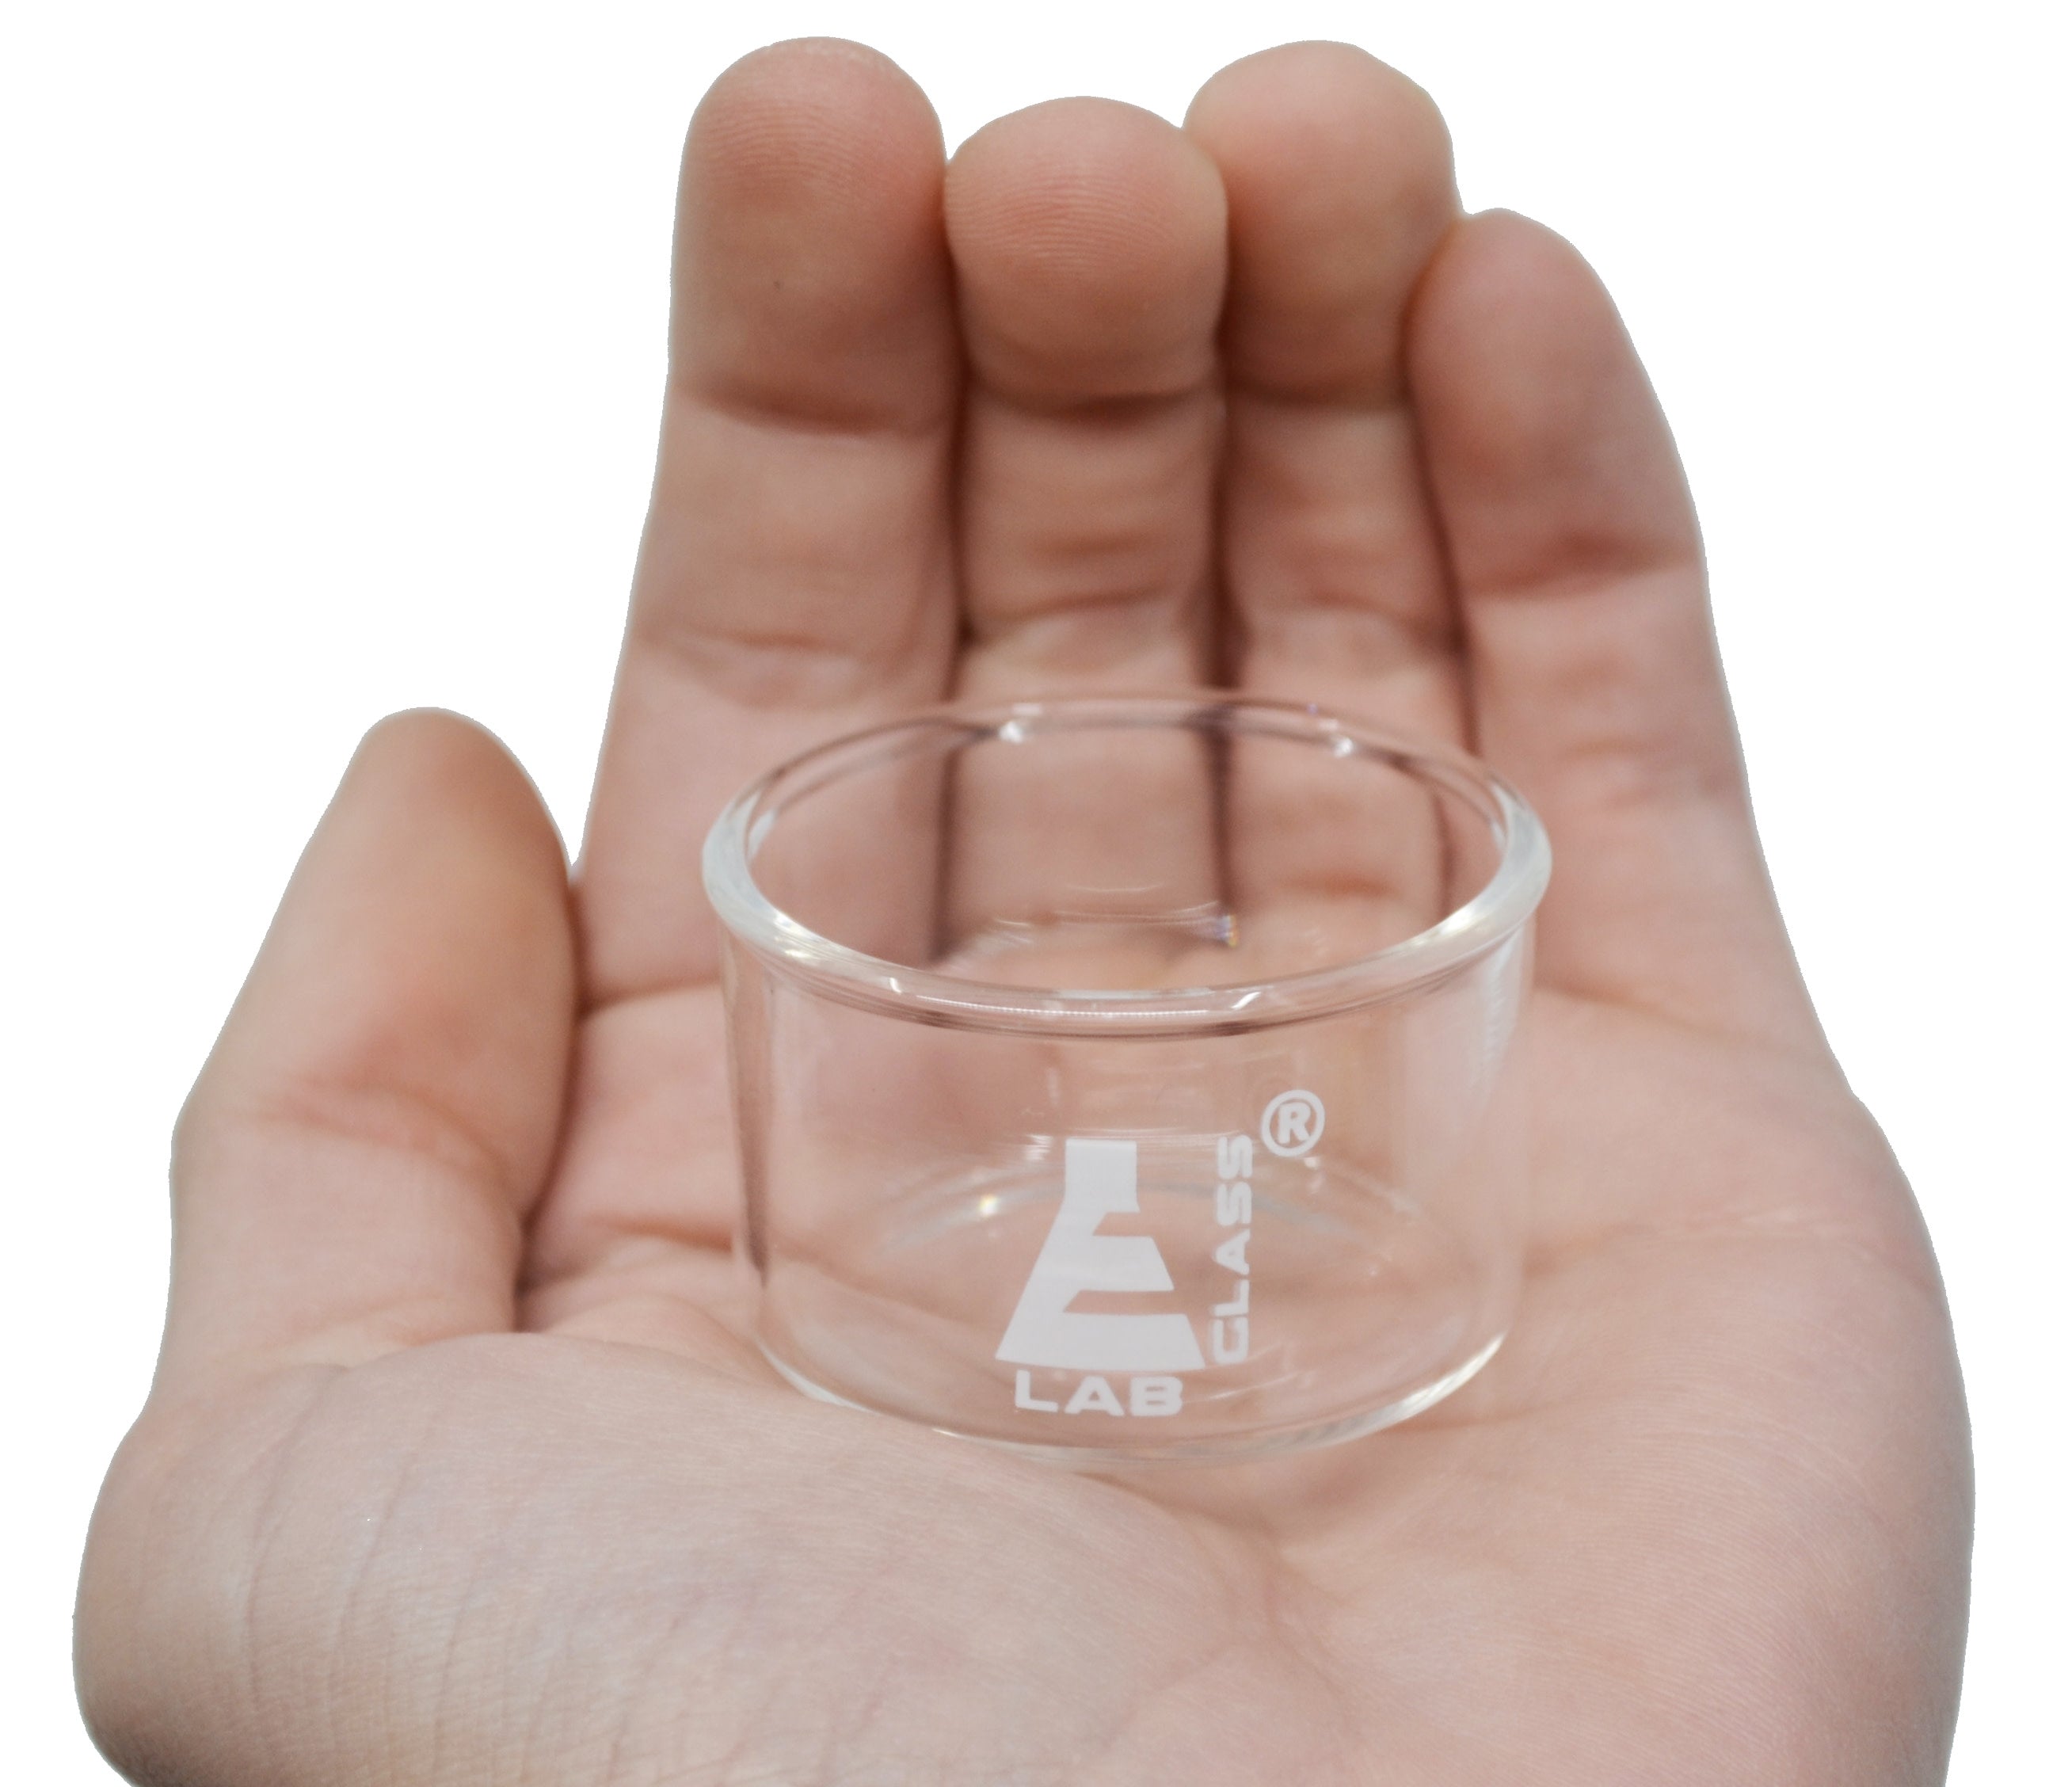 Crystallizing Dish, 100ml - Flat Bottom - Borosilicate Glass